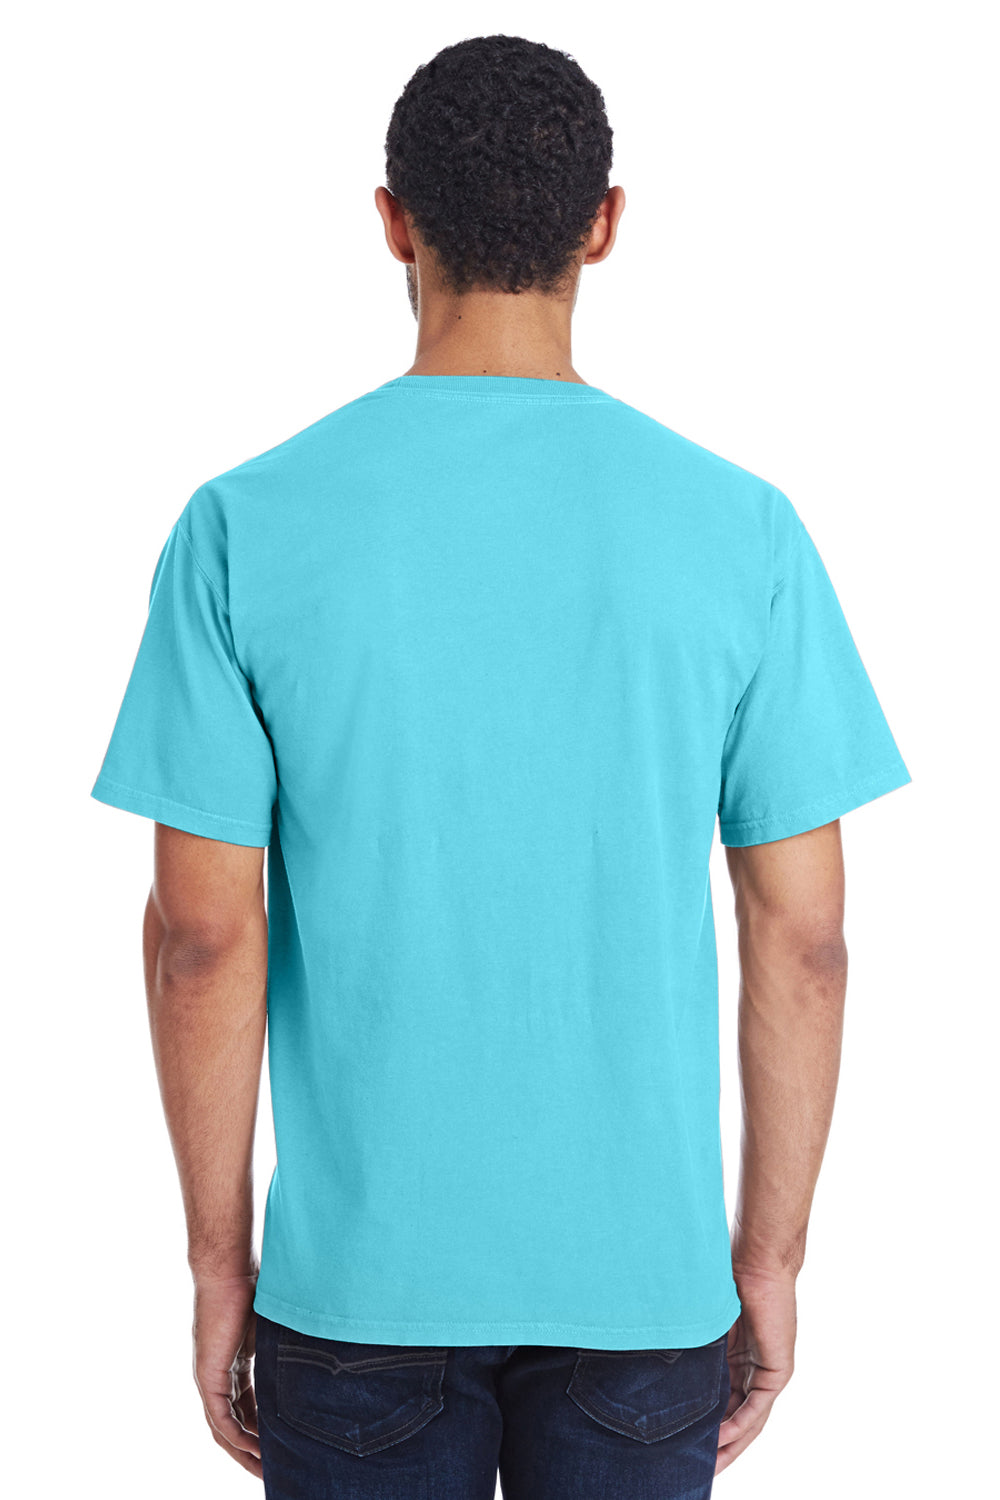 ComfortWash by Hanes GDH100 Short Sleeve Crewneck T-Shirt Freshwater Blue Back